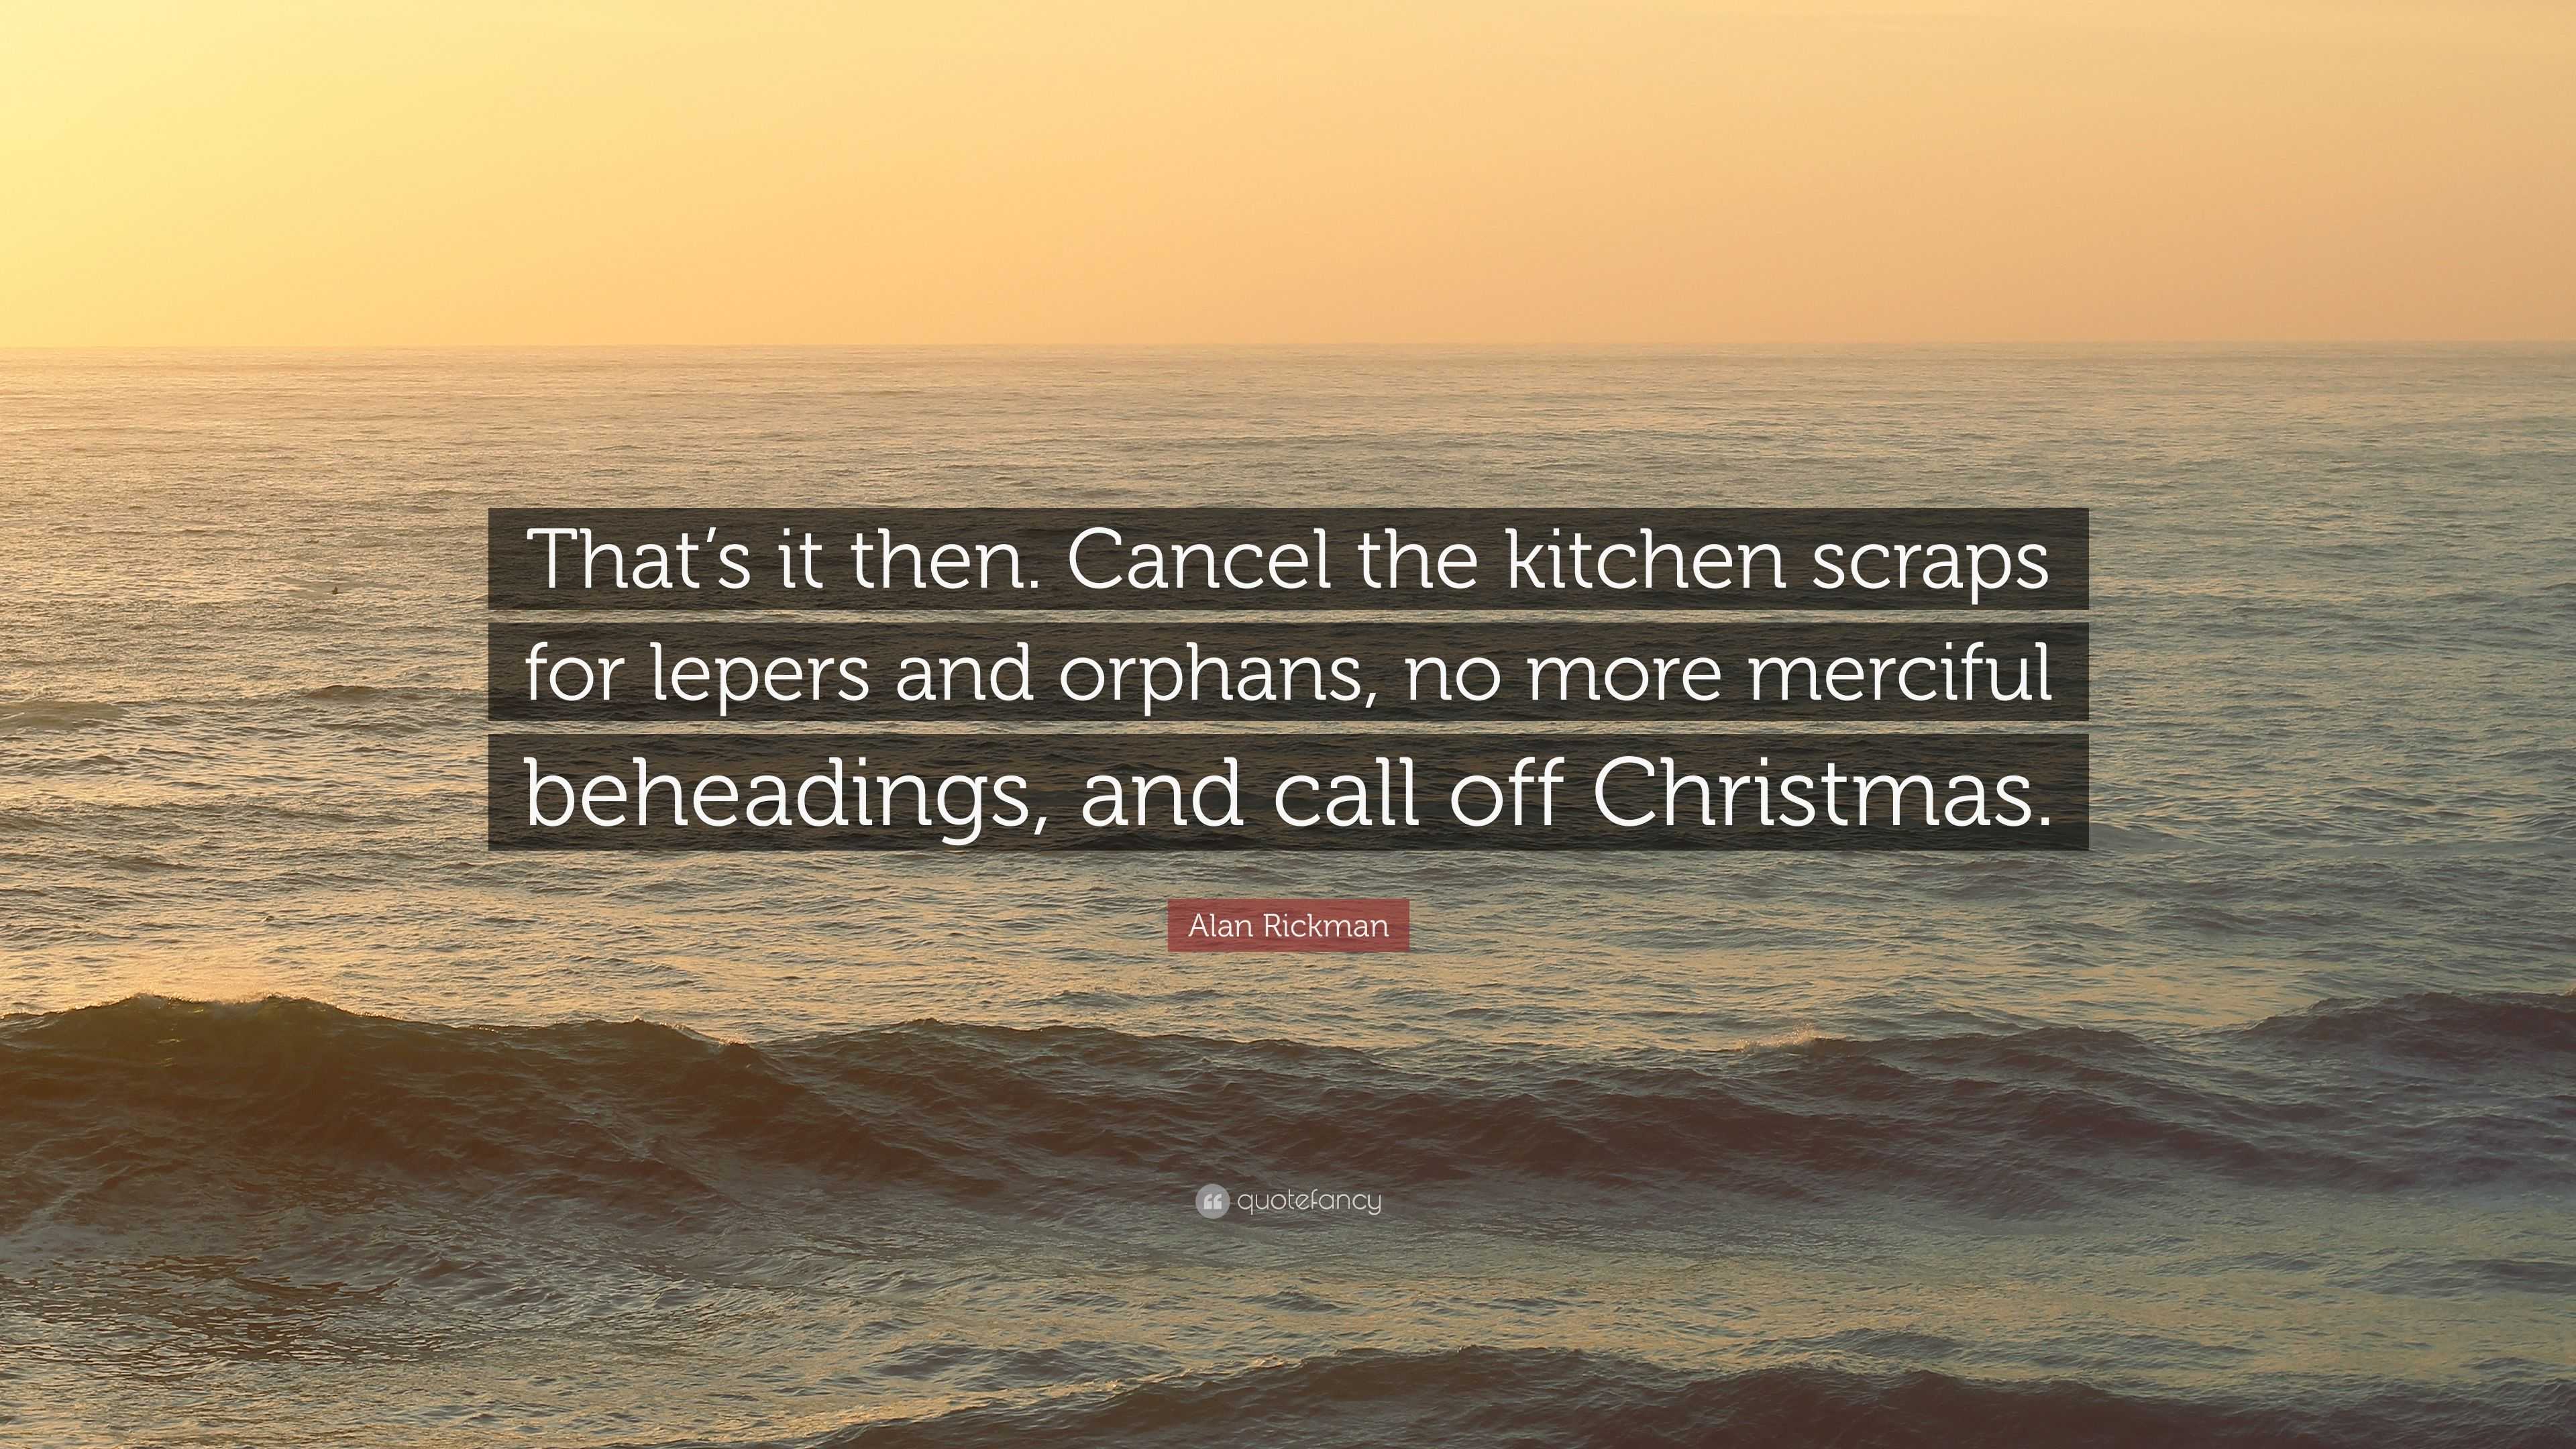 https://quotefancy.com/media/wallpaper/3840x2160/3946616-Alan-Rickman-Quote-That-s-it-then-Cancel-the-kitchen-scraps-for.jpg